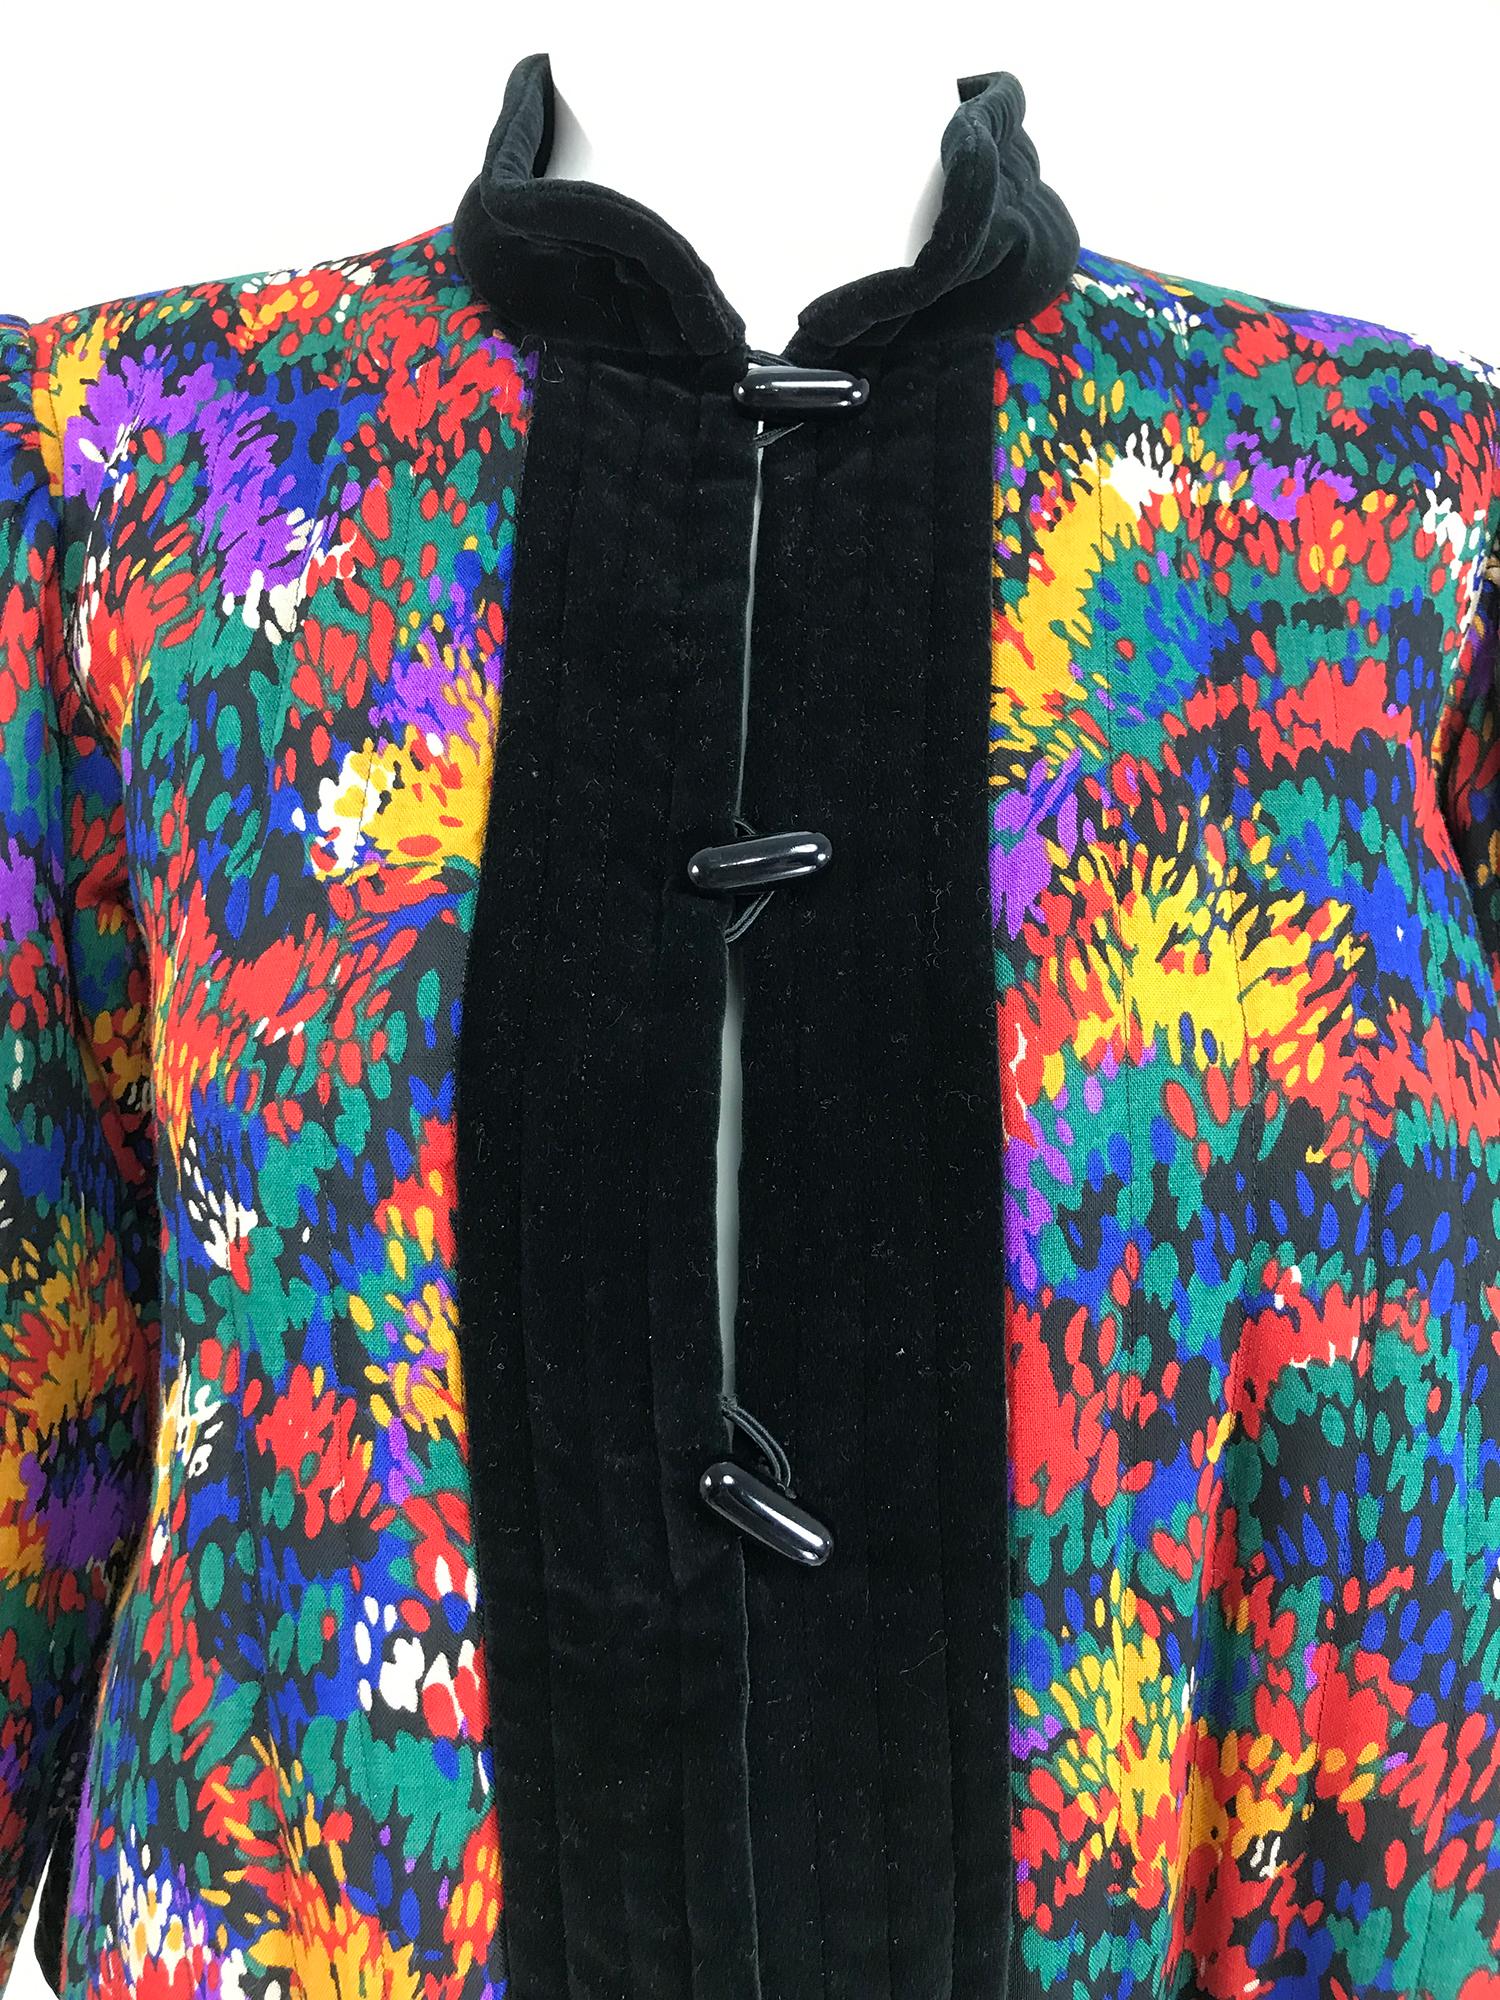 Yves Saint Laurent Quilted Modern Print Challis and Velvet Jacket 1980s For Sale 6